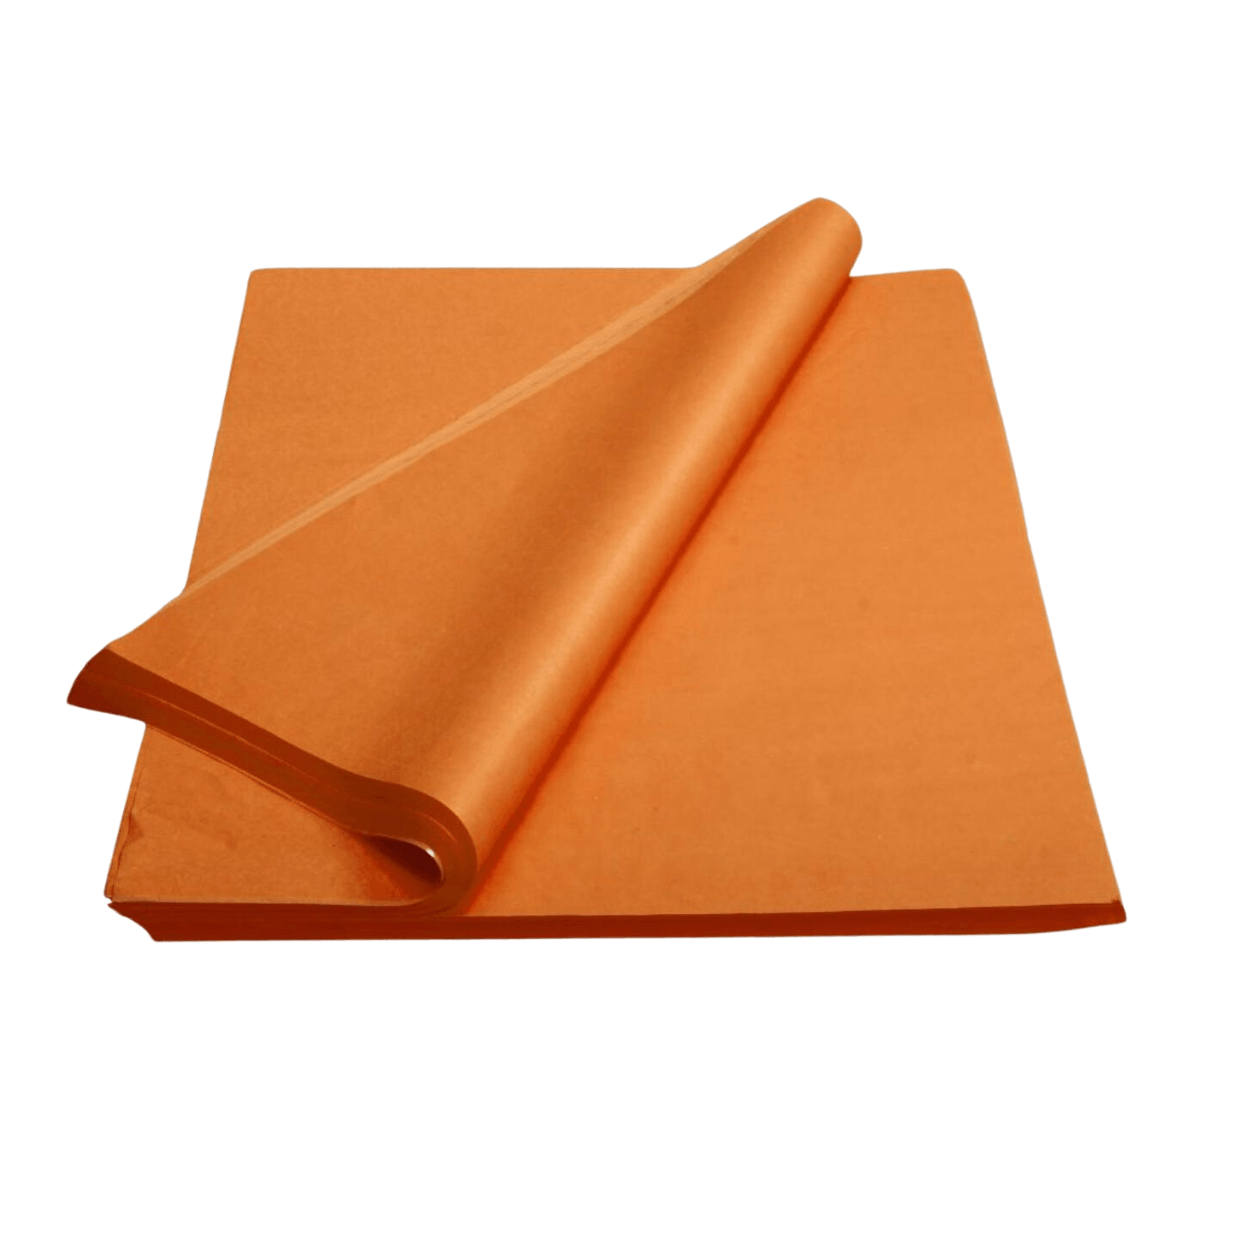 Dark Pink Color Tissue Paper, 15x20 inch, Bulk 480 Sheet Pack